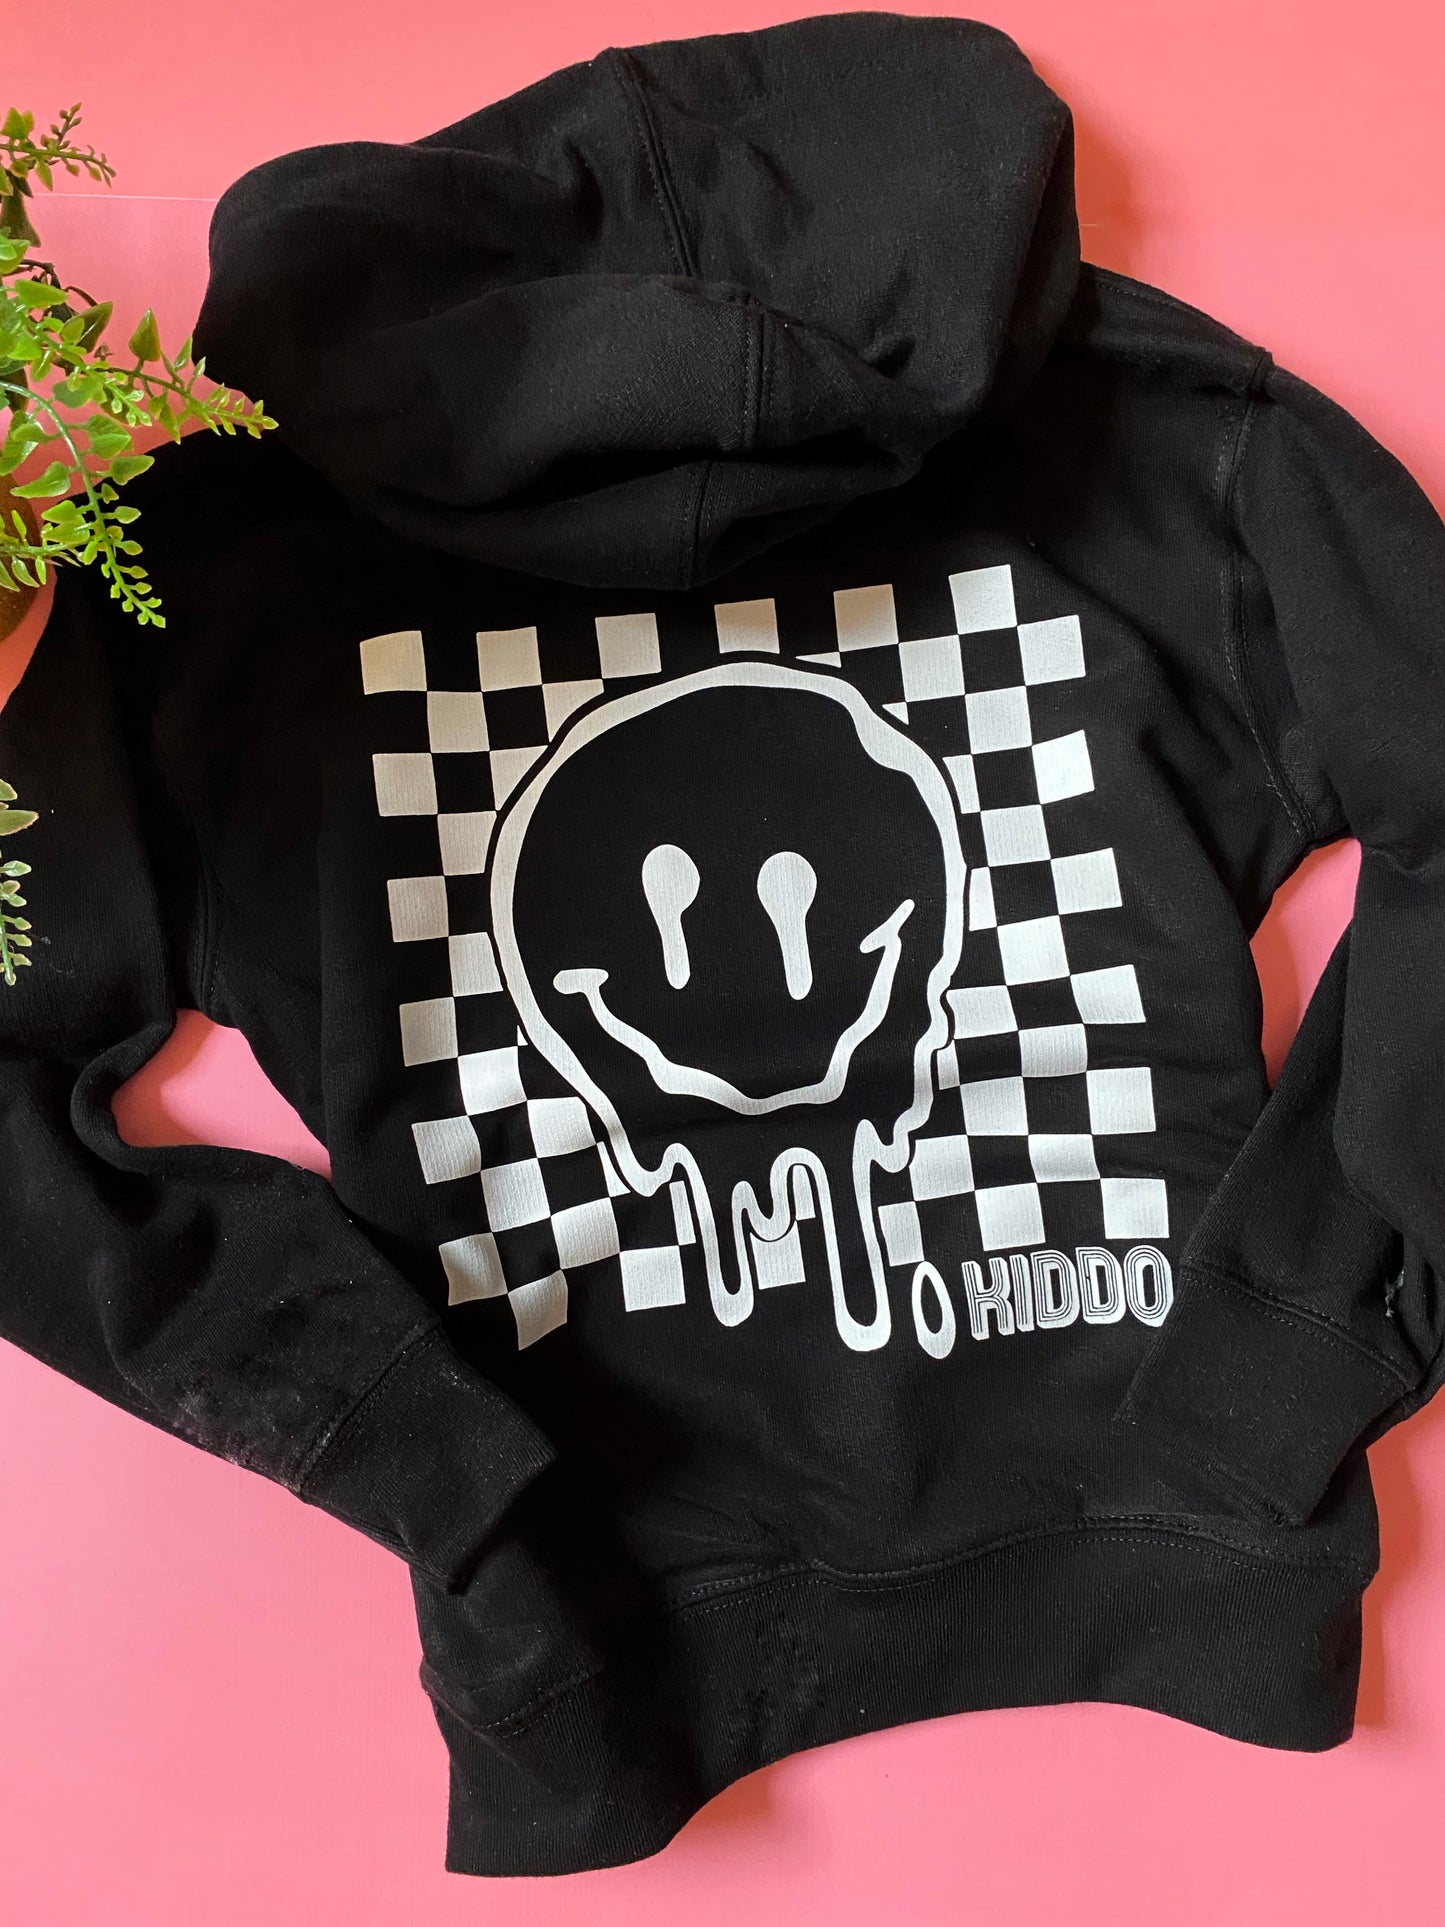 Checkered smiley - Kiddo hoodie